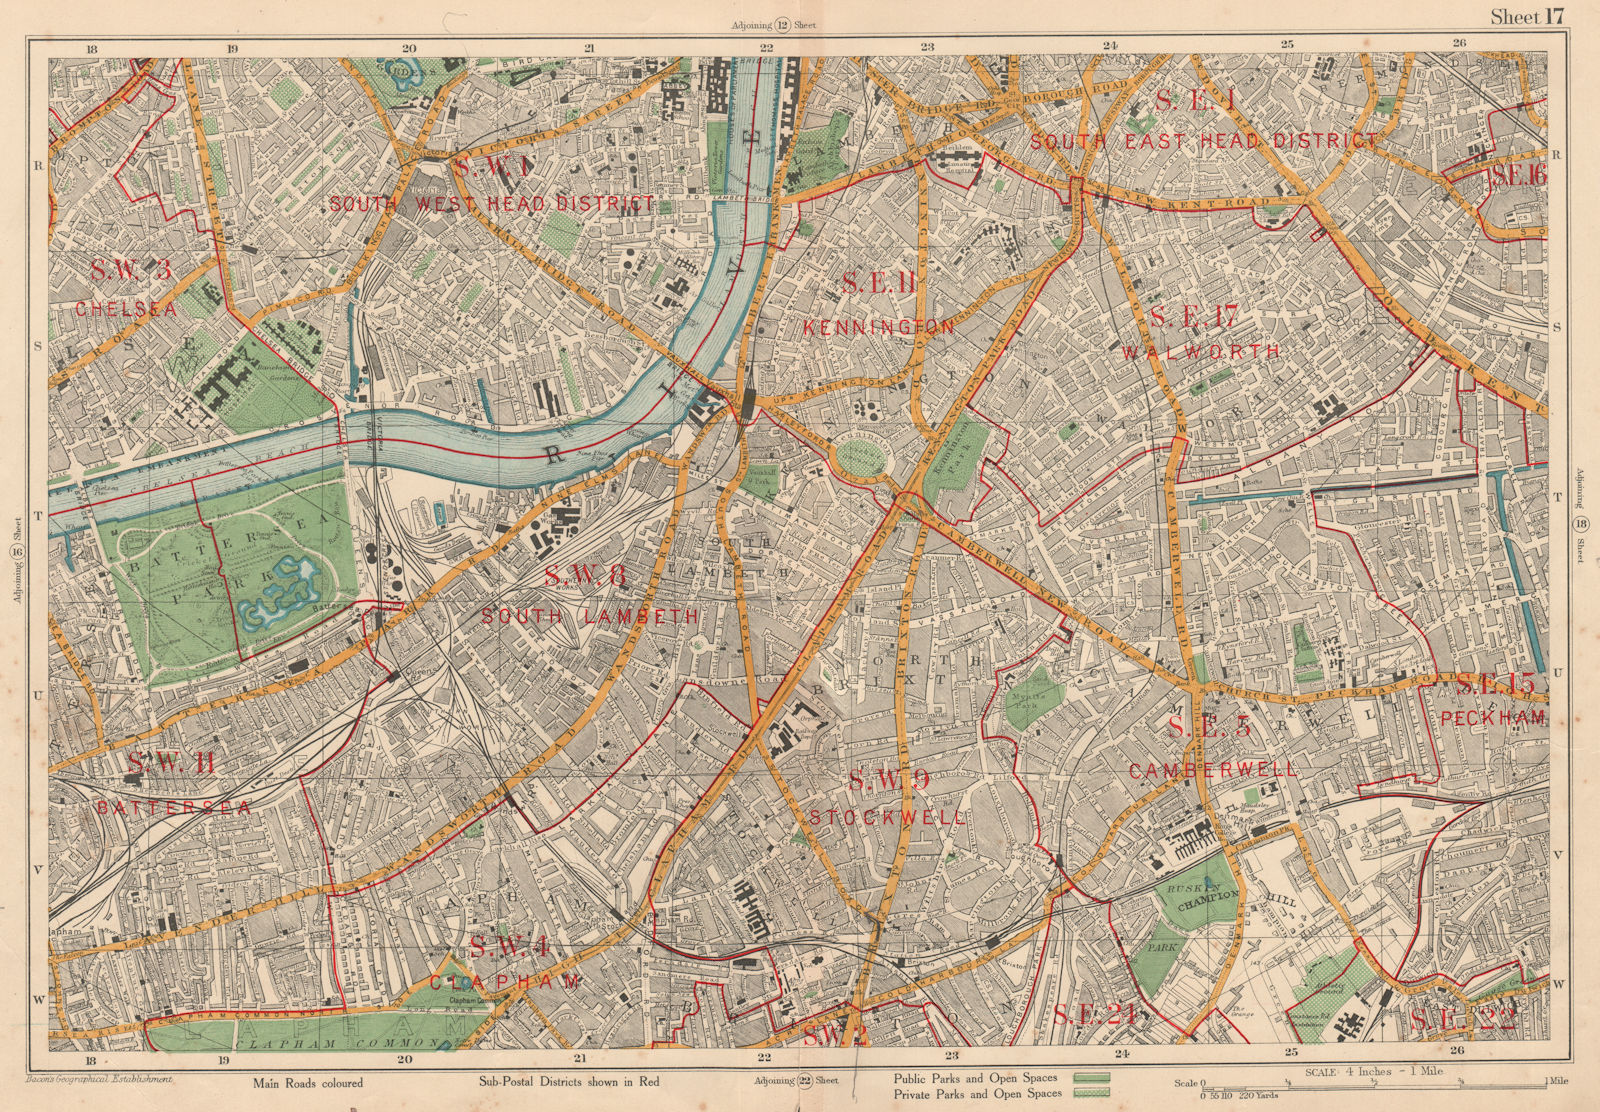 LAMBETH CAMBERWELL Westminster Clapham Brixton Battersea Pimlico. BACON 1927 map